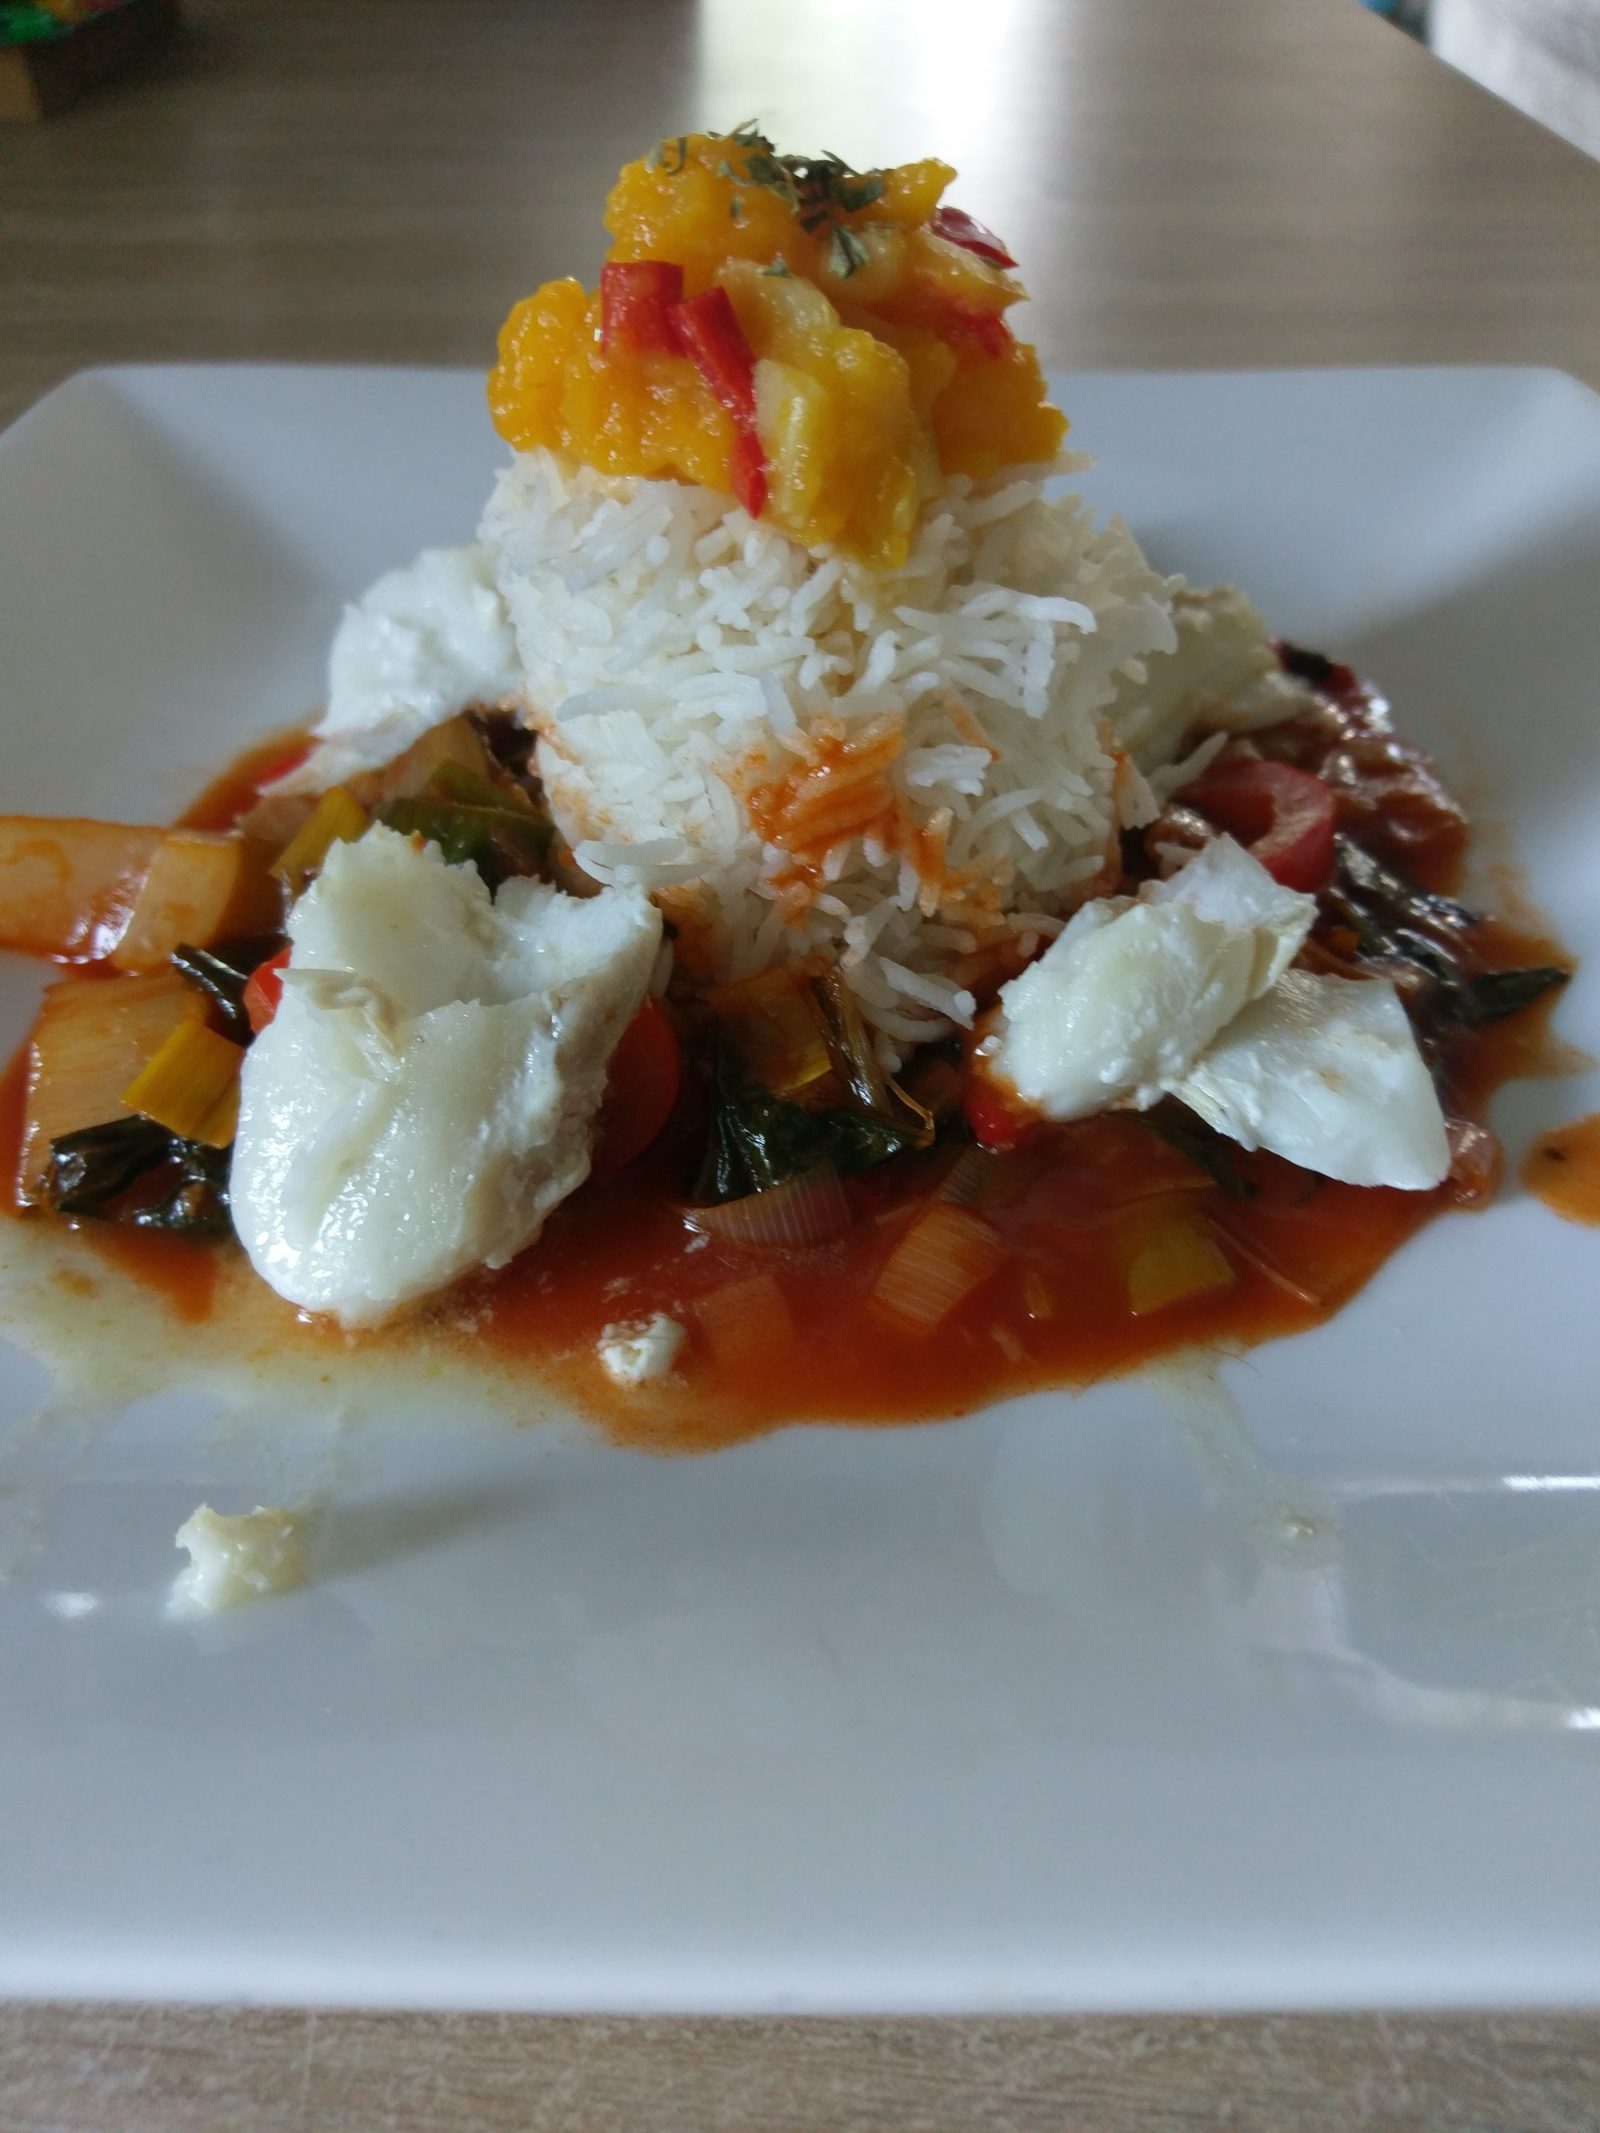 Spicy fish dish with papaya chutney